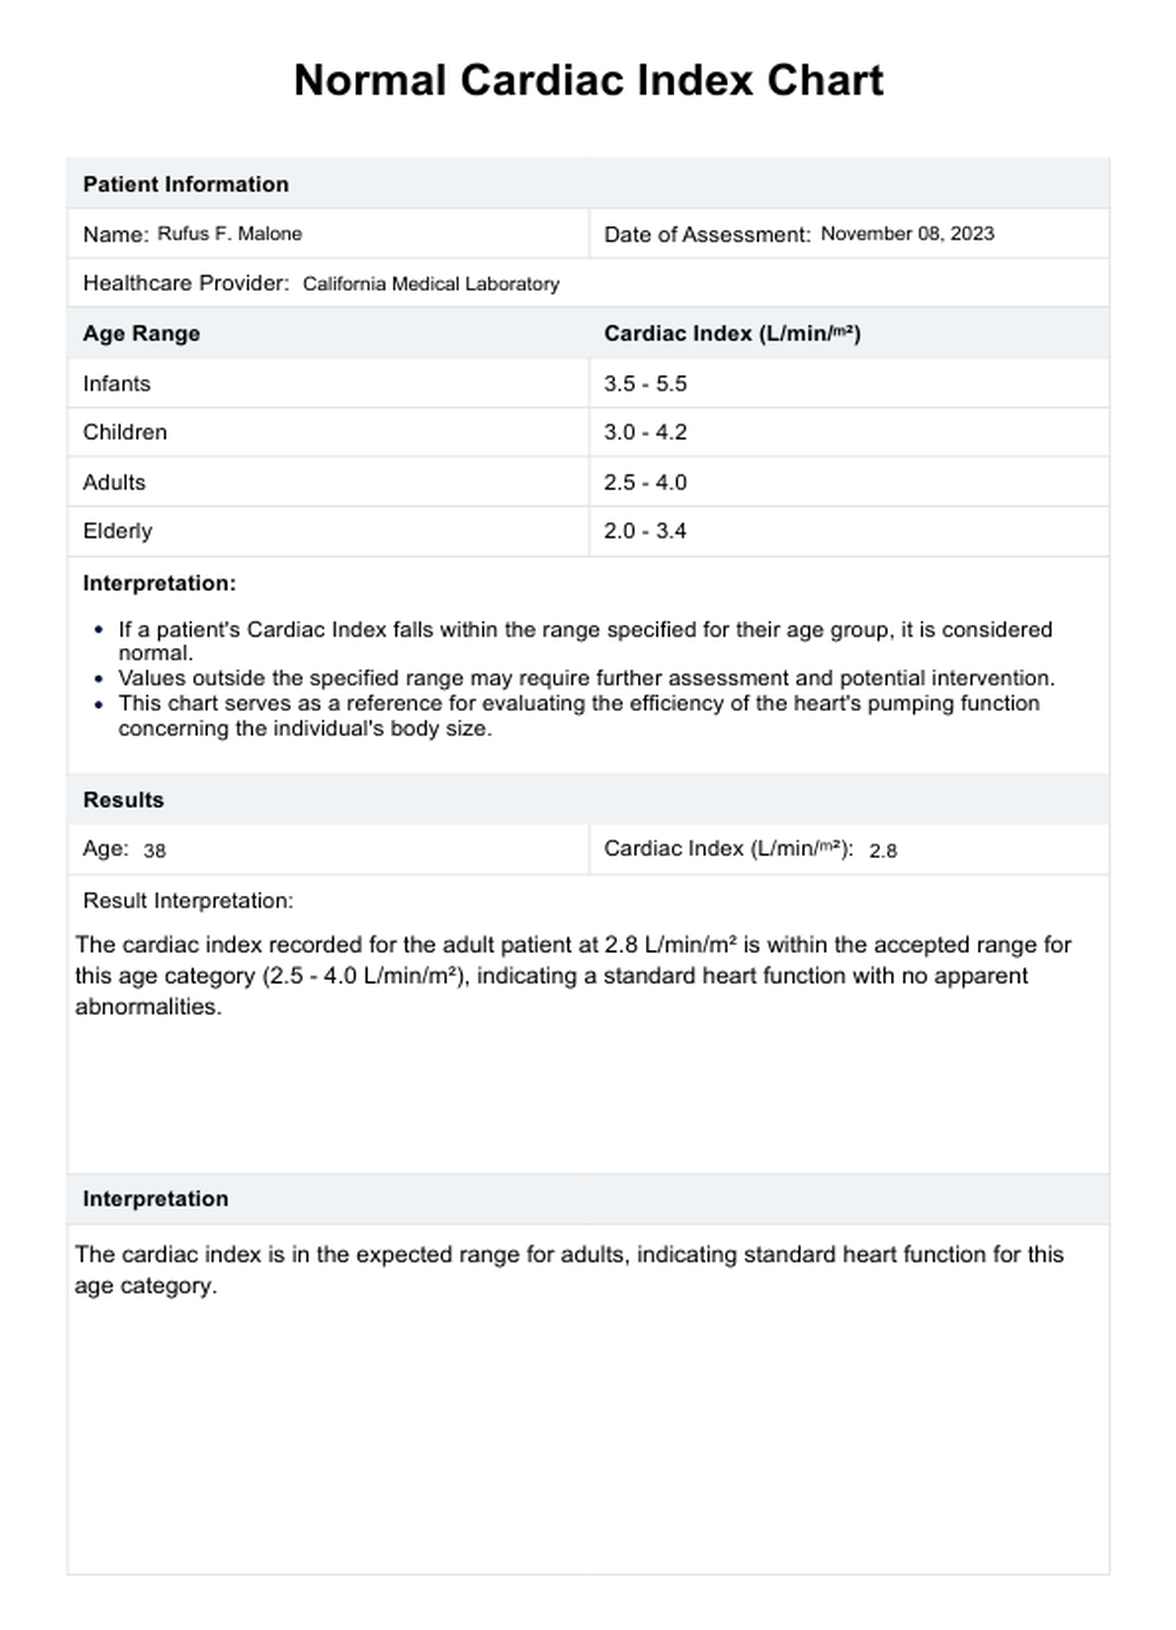 Normal Cardiac Index PDF Example